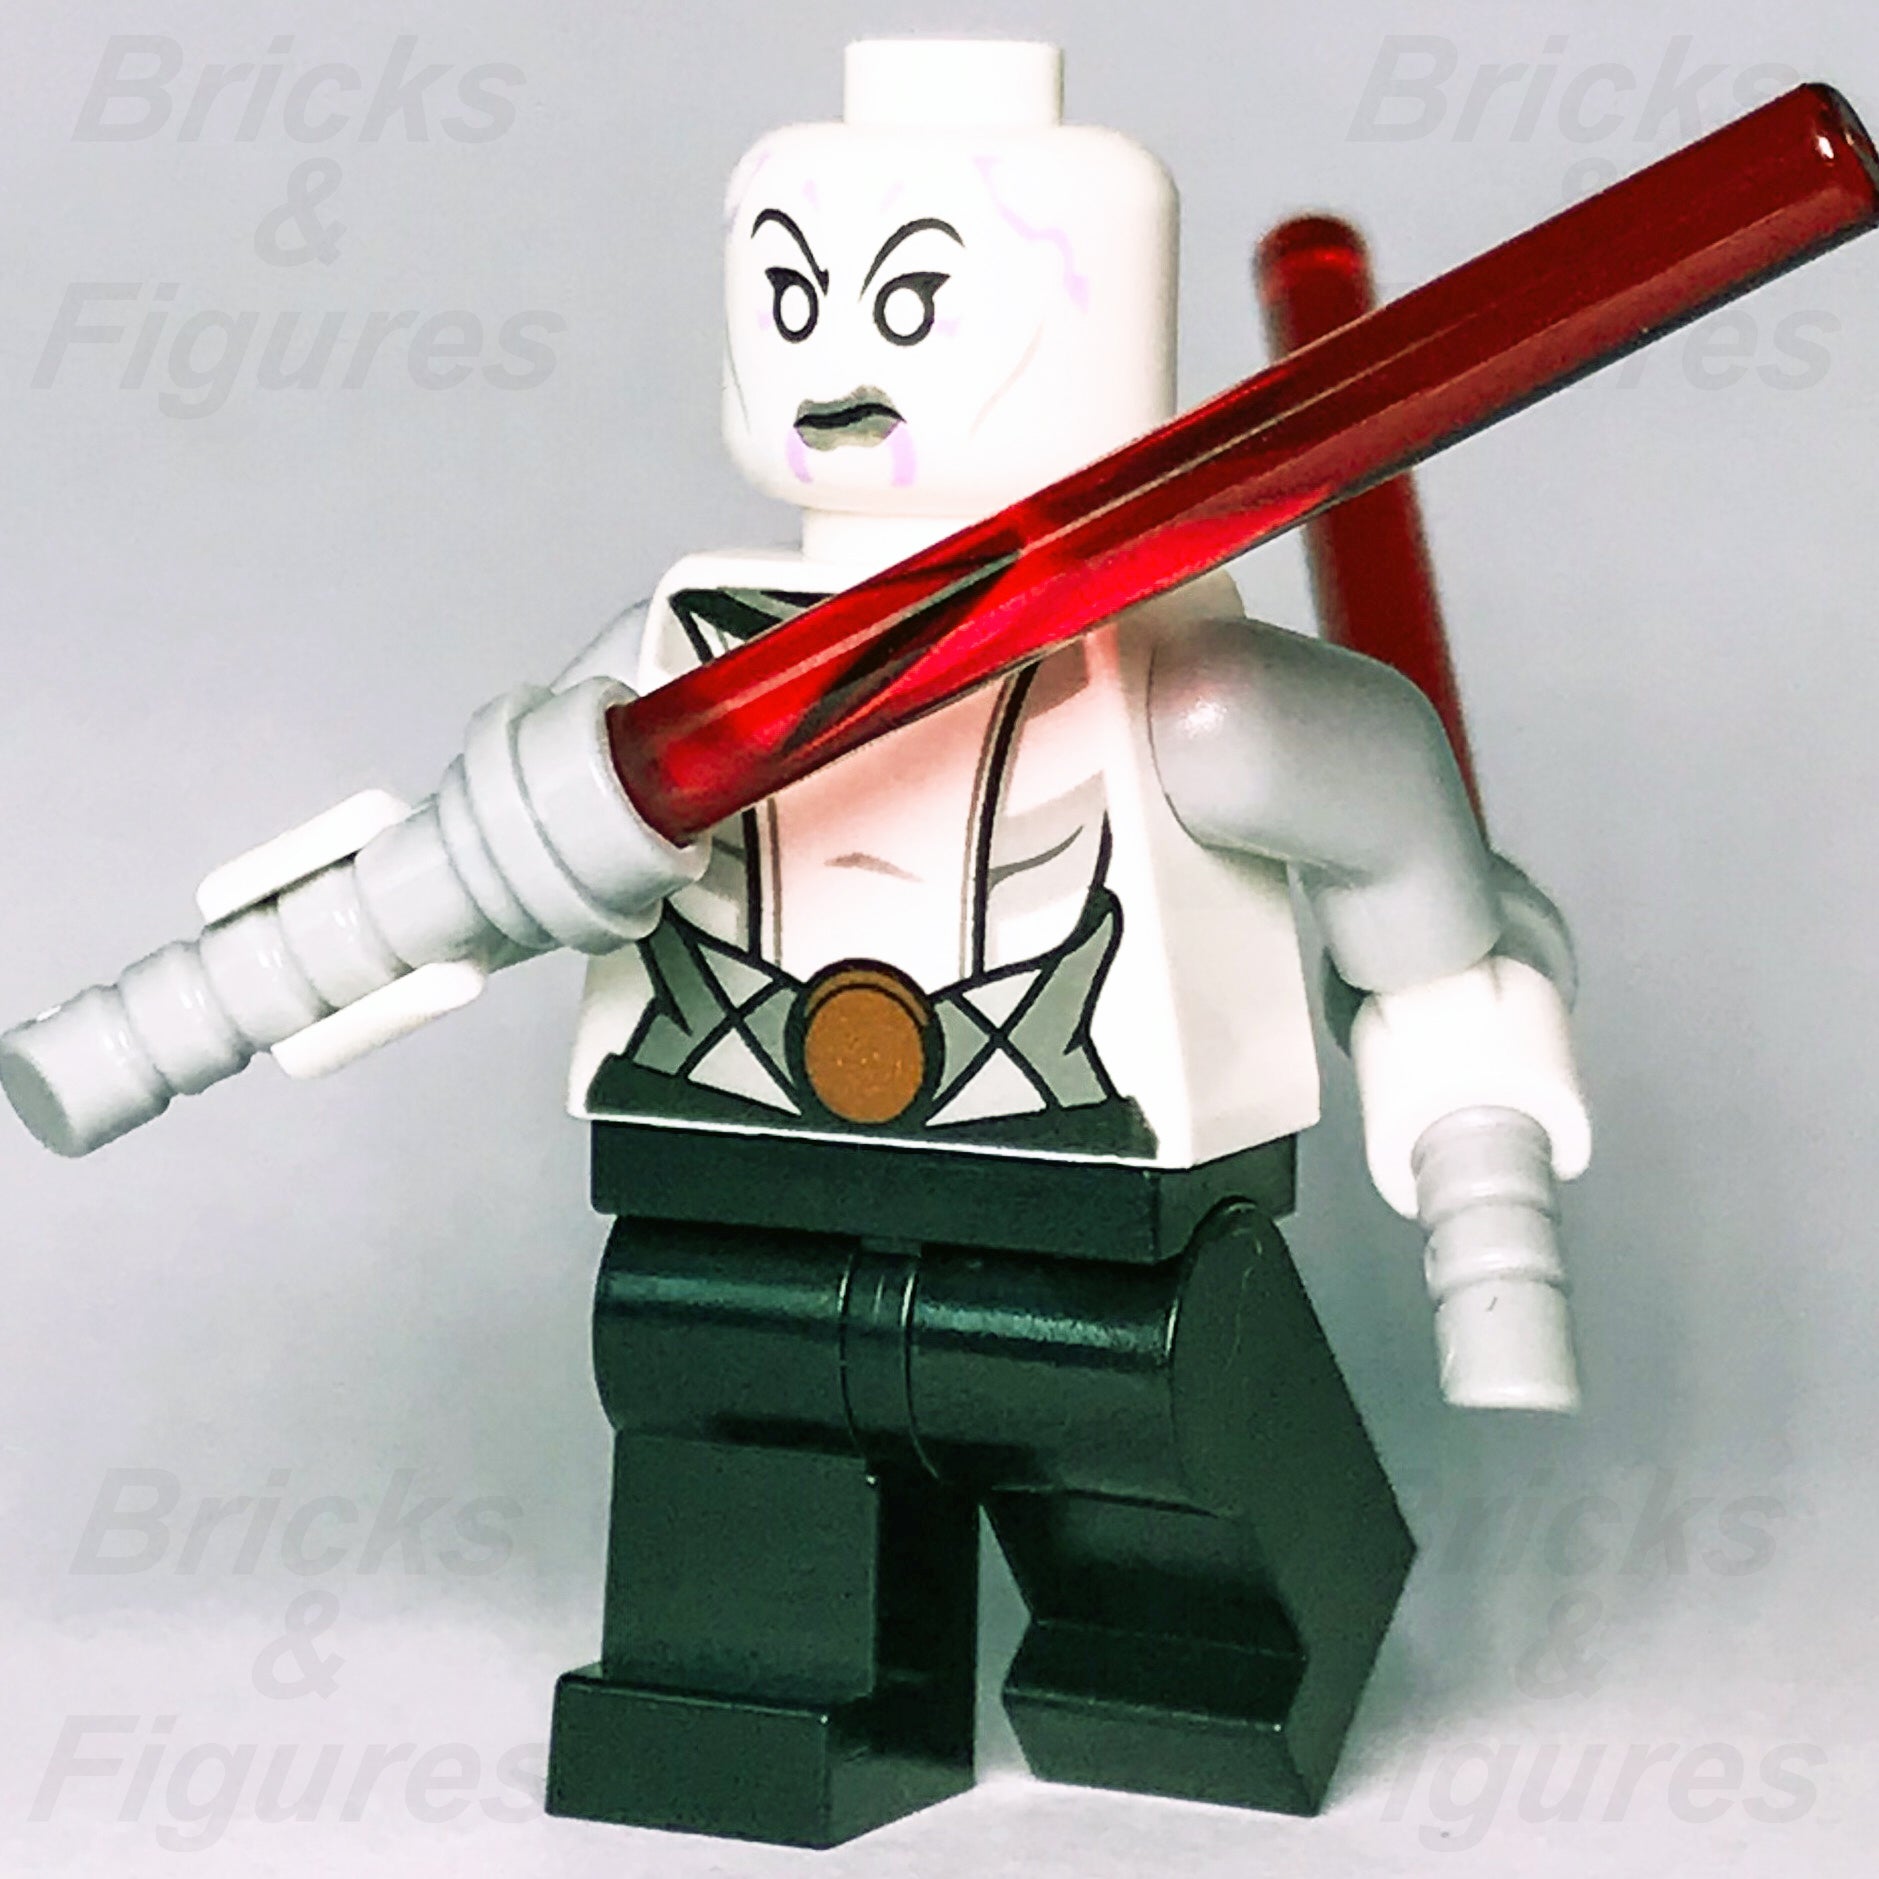 New Star Wars LEGO Asajj Ventress Sith Apprentice Minifigure 75087 - Bricks & Figures